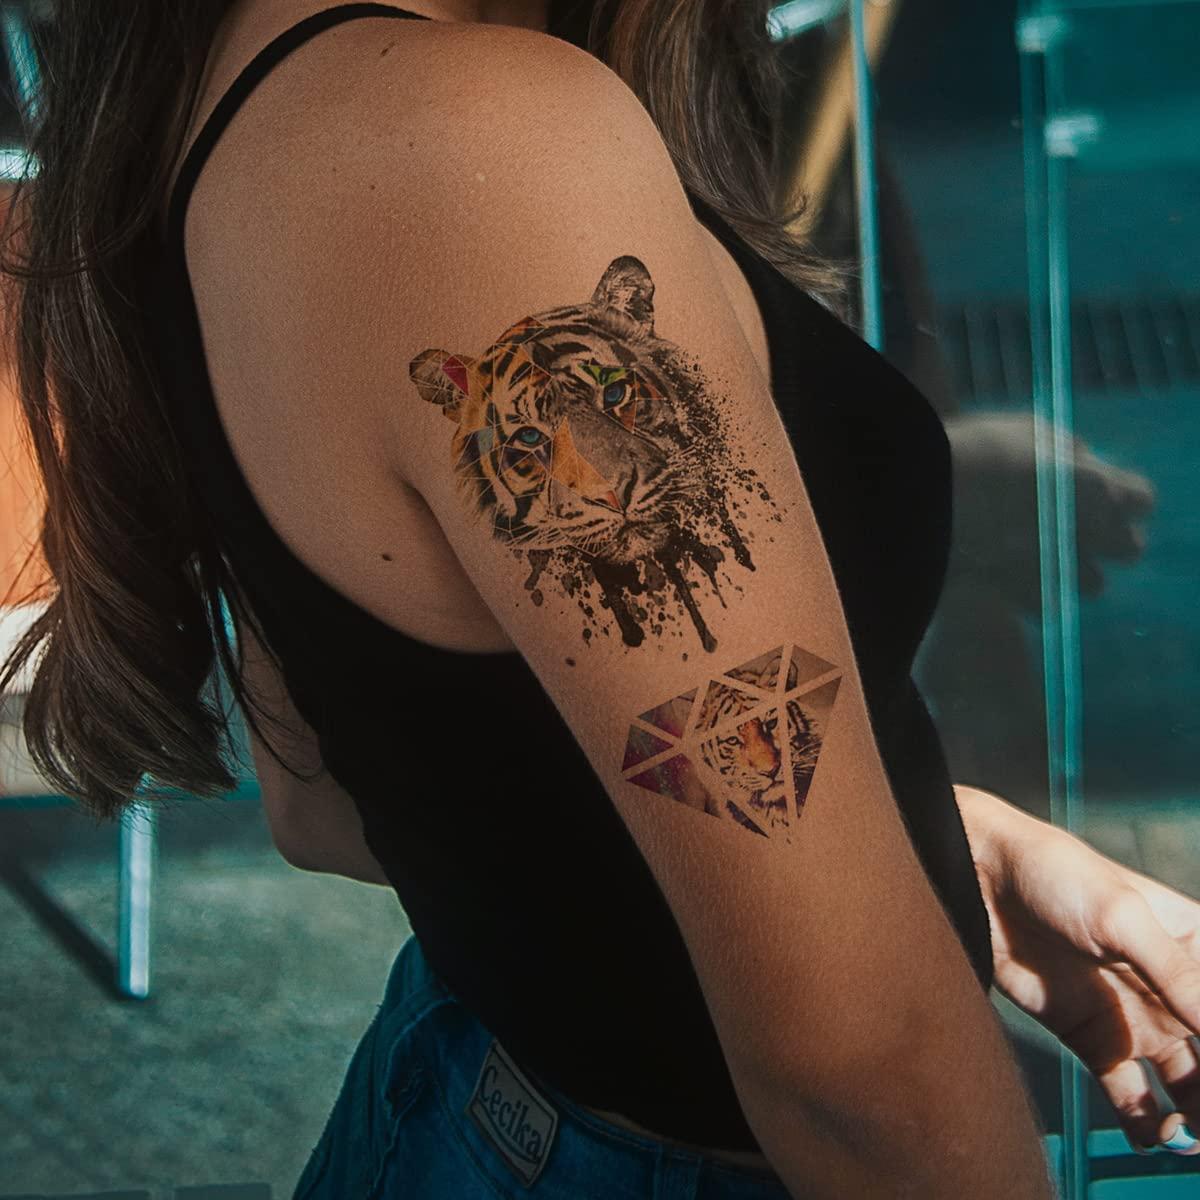 Razzouk Tattoo - Since 1300 - The lion of Judah and the tree of Life.  Custom design. | Facebook